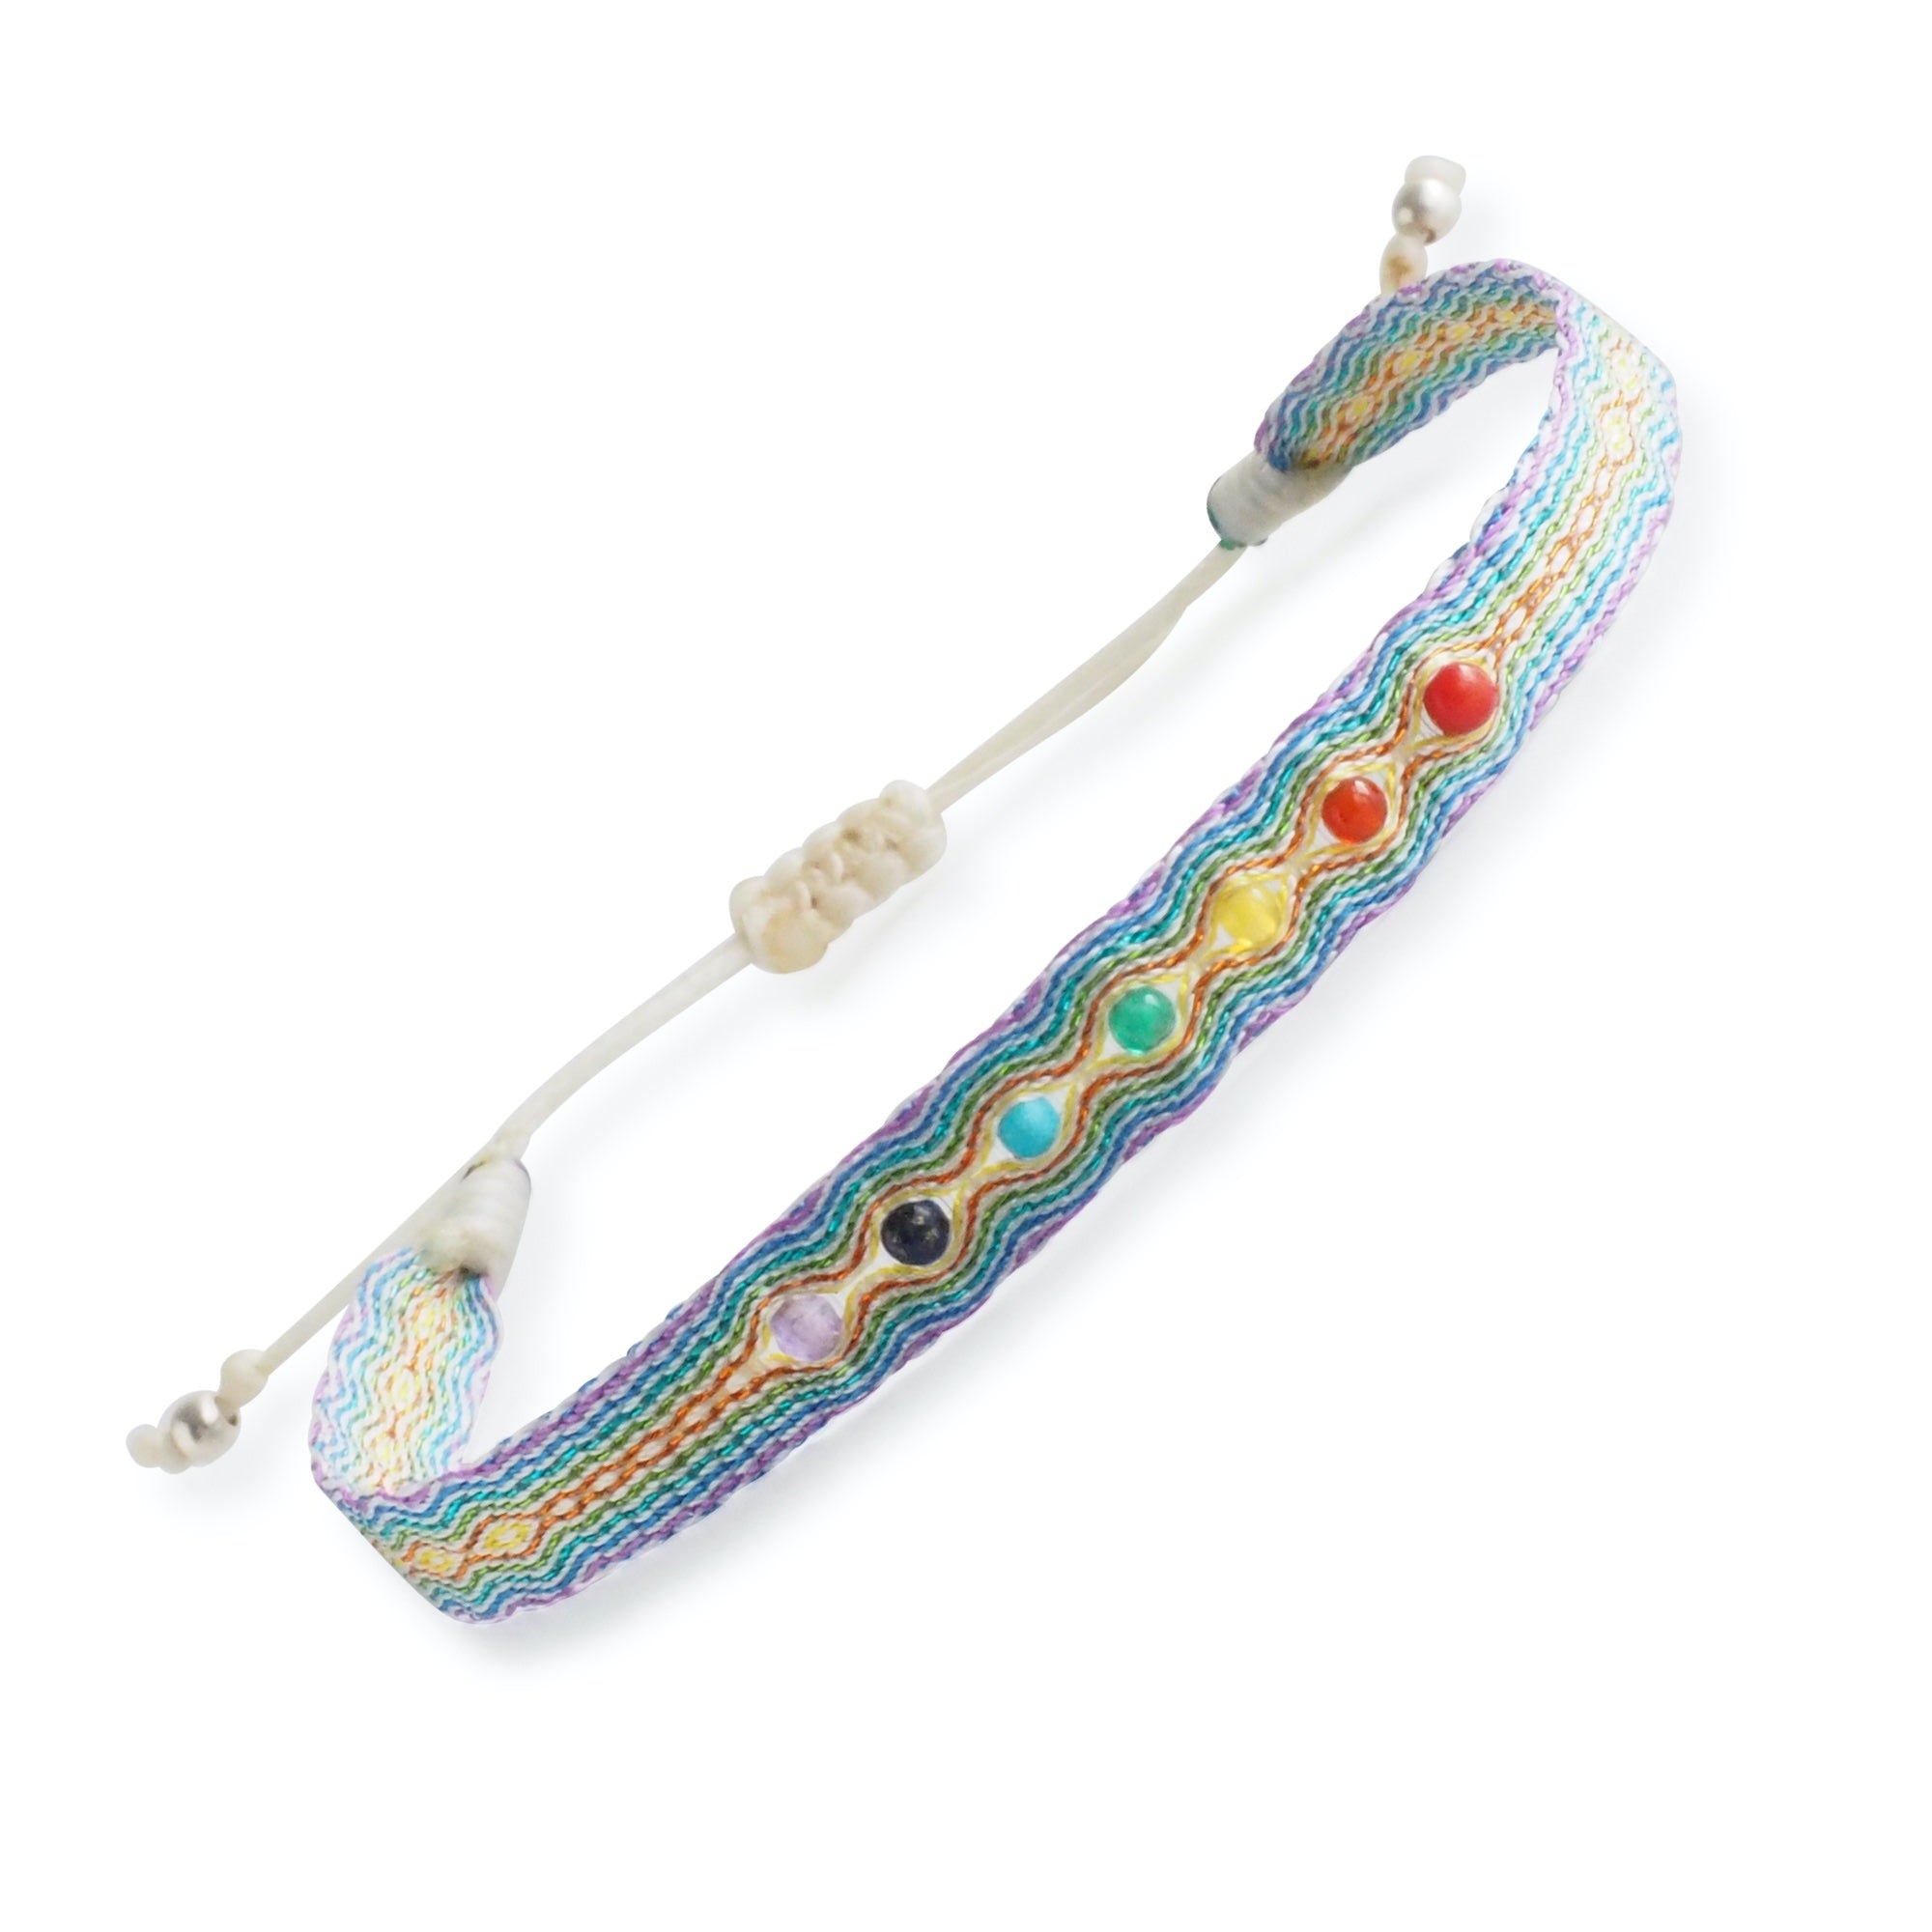 Egyptian Loom Wellness Chakra Bracelet light made with 80 polyester threads with 7 gemstones representing each chakra. Adjustable Bracelet